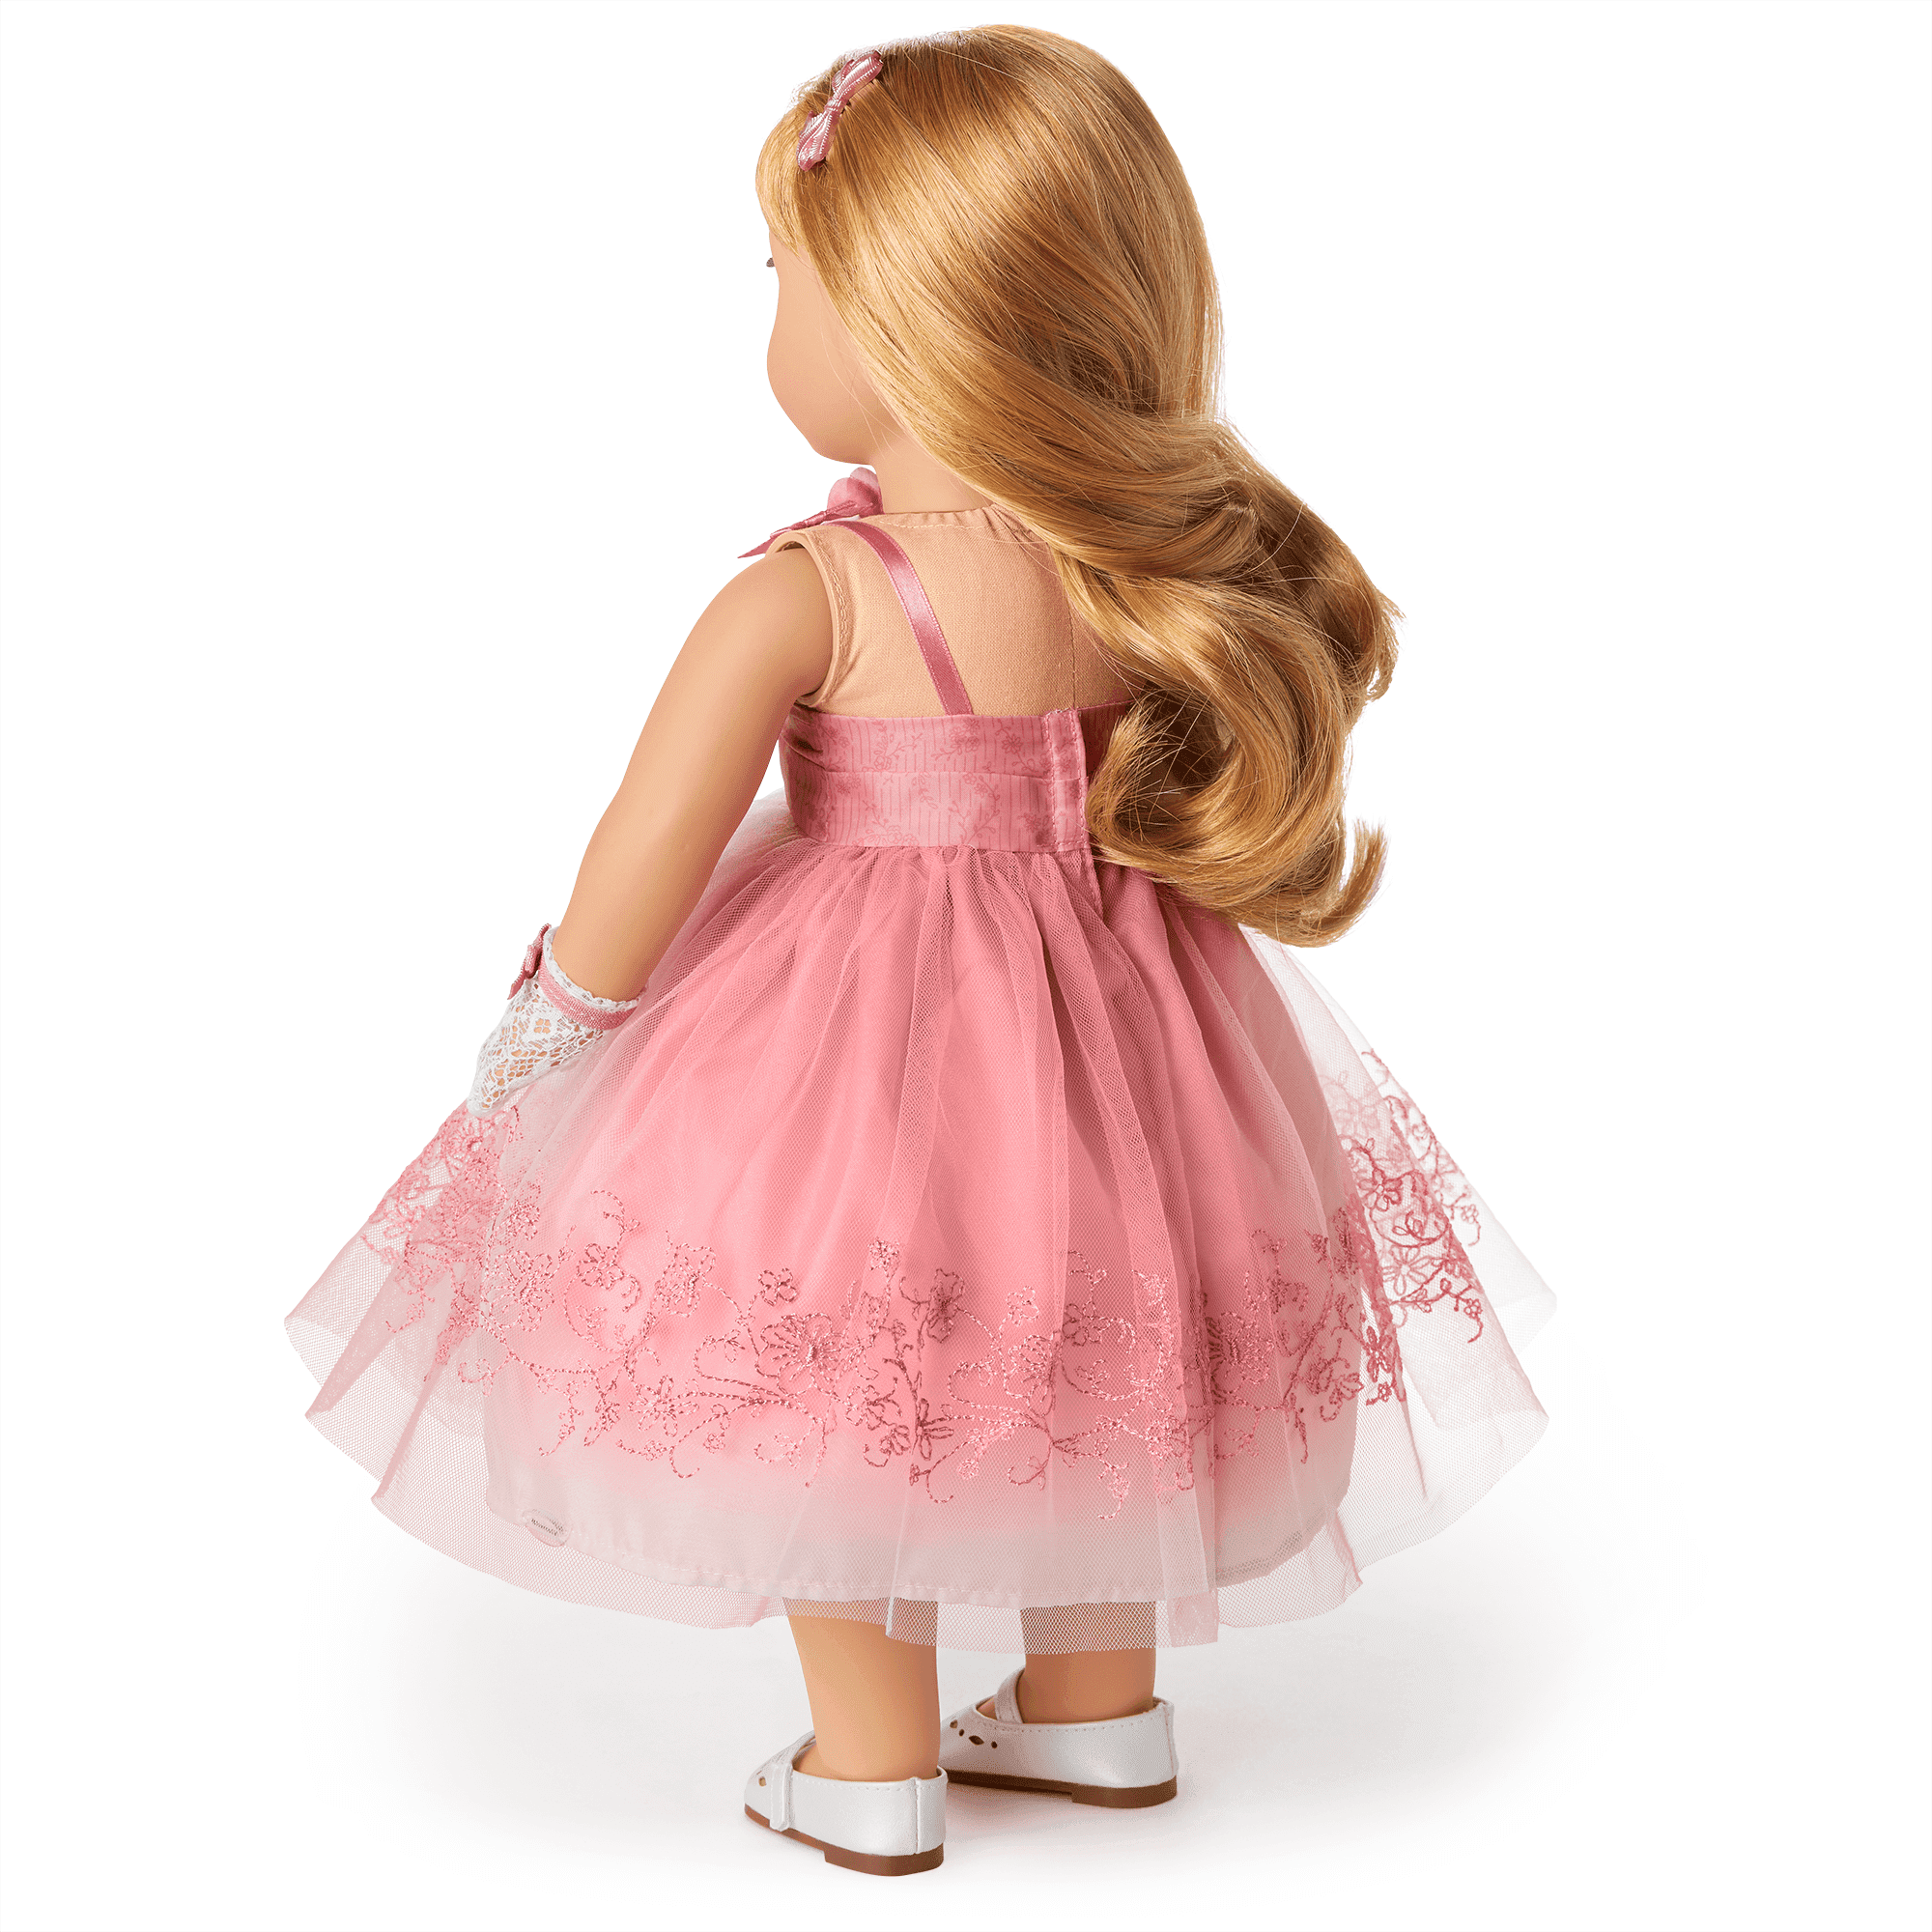 Maryellen’s™ Pretty Pink Dress for 18-inch Dolls